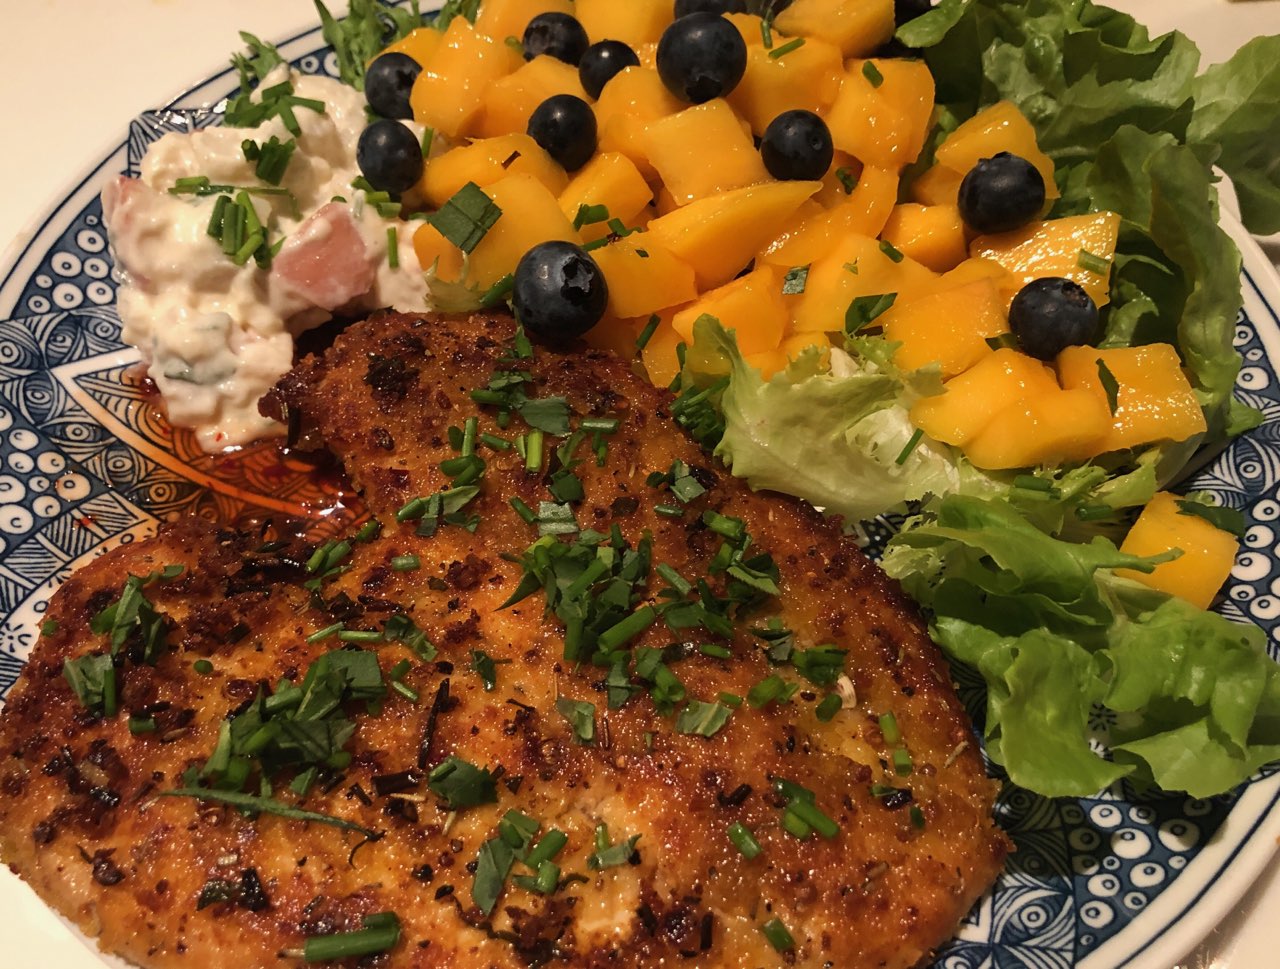 Free Range Chicken Breast with Potato Salad and Mango, Blueberry Salad